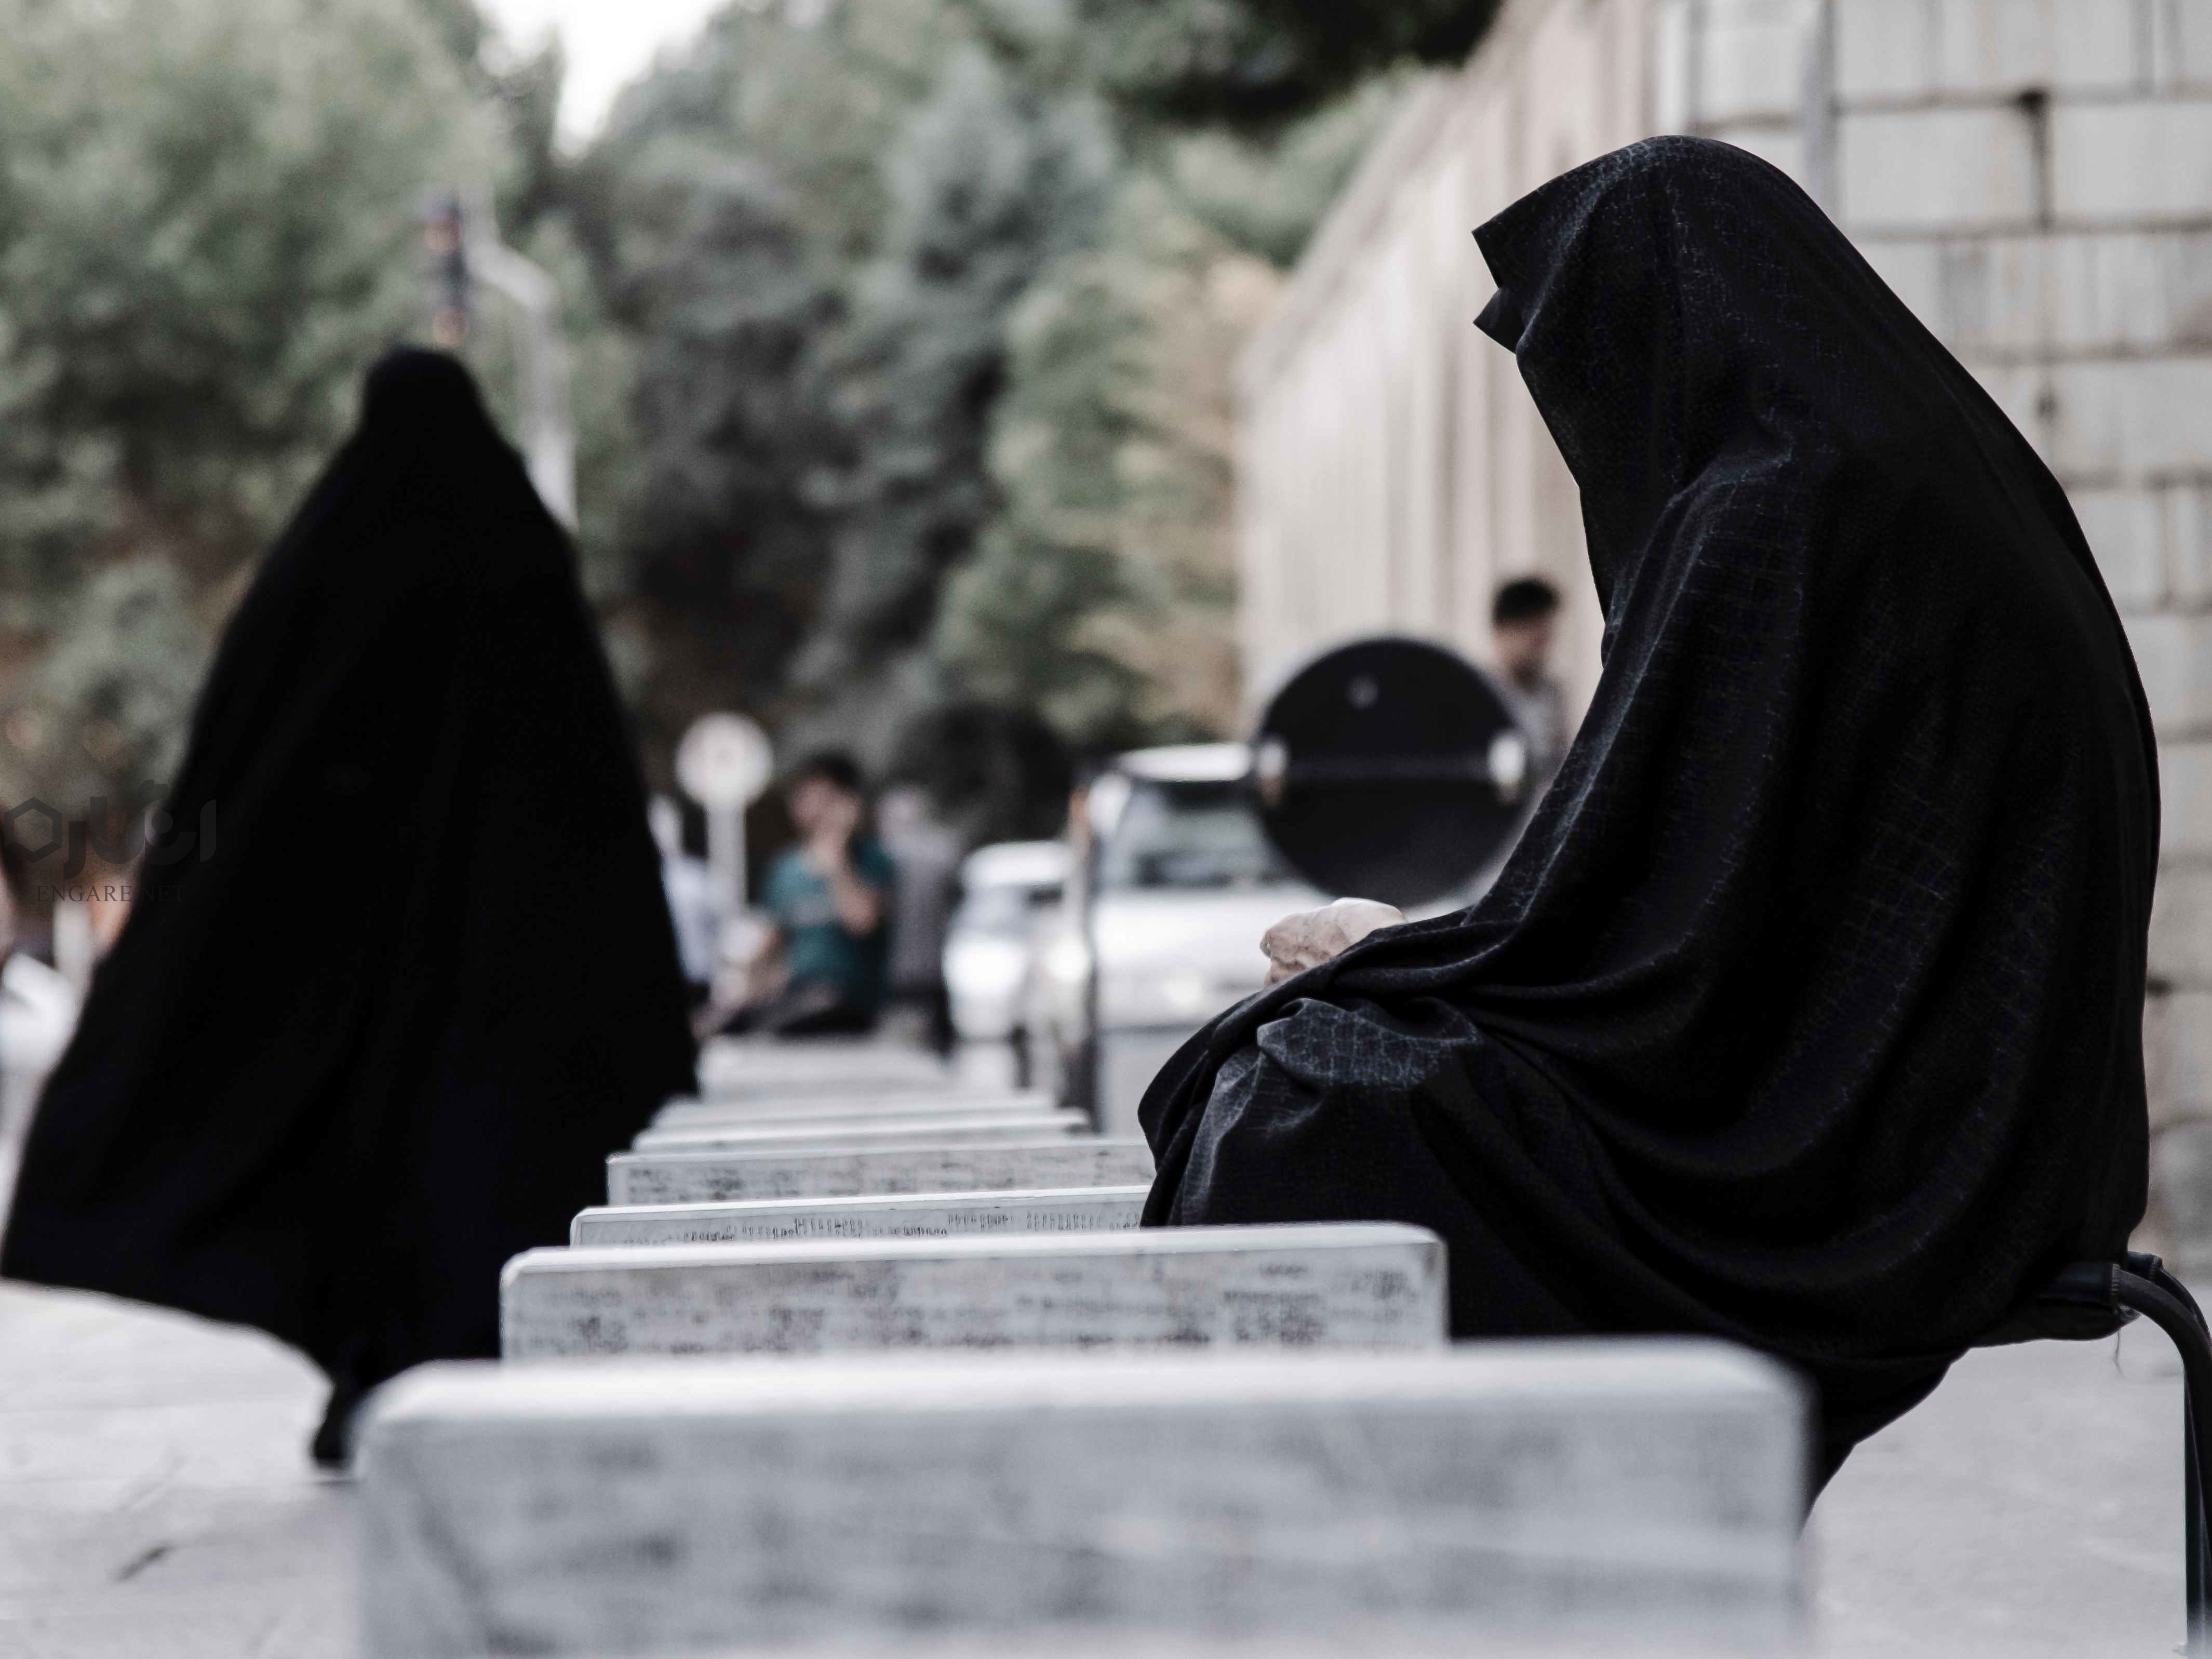 Iran Woman in hijab - زنان خودسرپرست و سالمندان، فراموش نشوند - ویلهلم دیلتای, میشل فوکو, فضامندی اجتماعی, سیاست‌های رفاهی, سیاست‌گذاری مطلوب, سالمندان, زنان خودسرپرست, رفاه اجتماعی, خانواده هسته‌ای